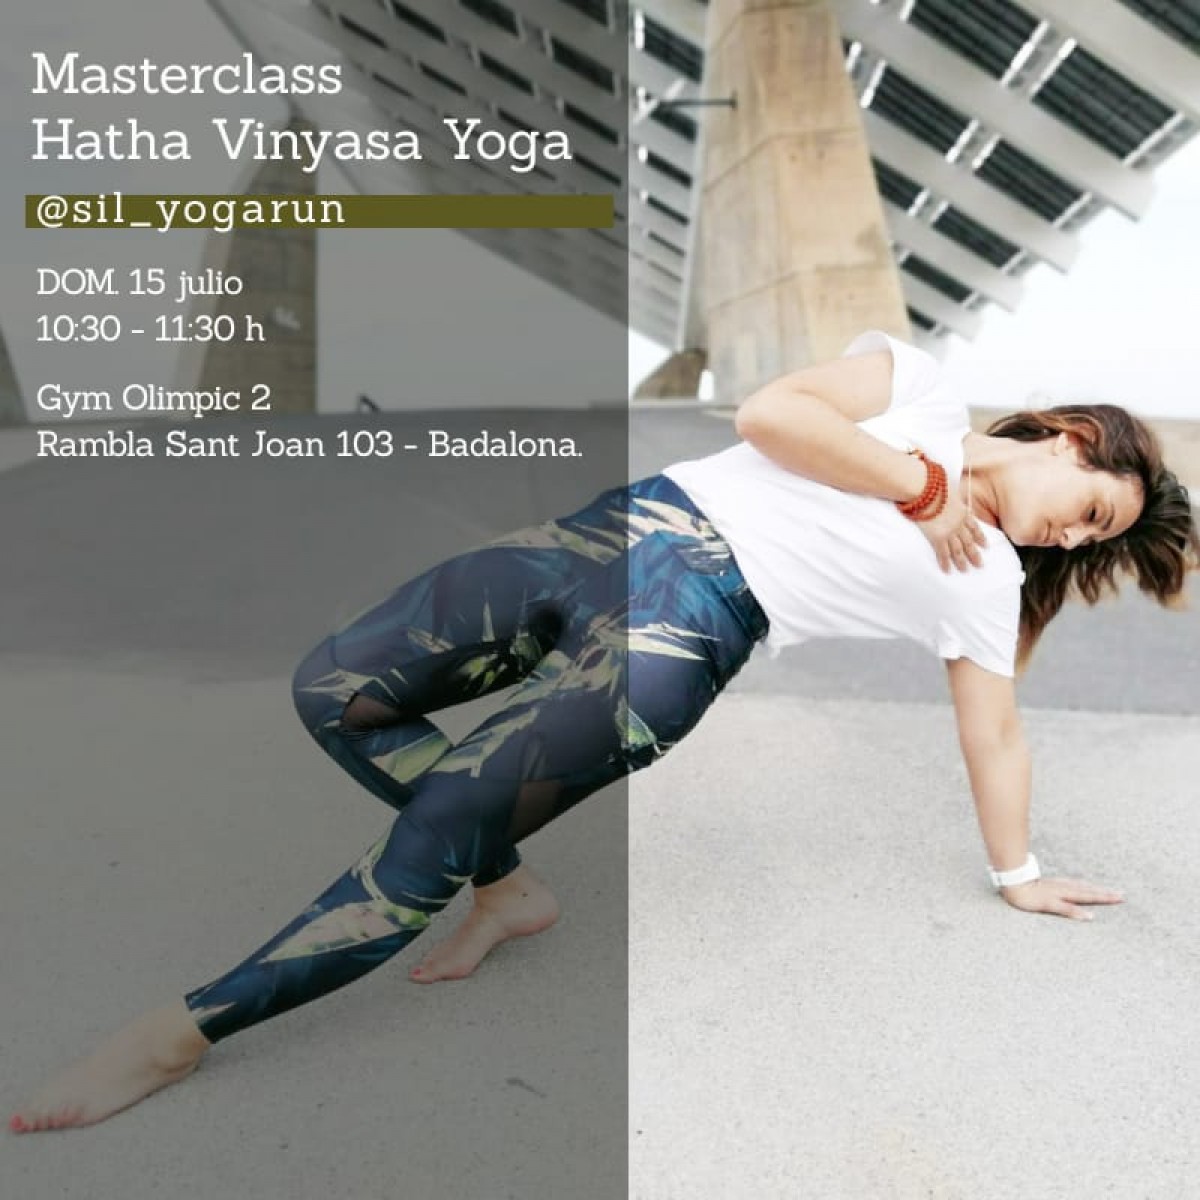 Masterclass Hatha Vinyasa Yoga con sil_yogarun